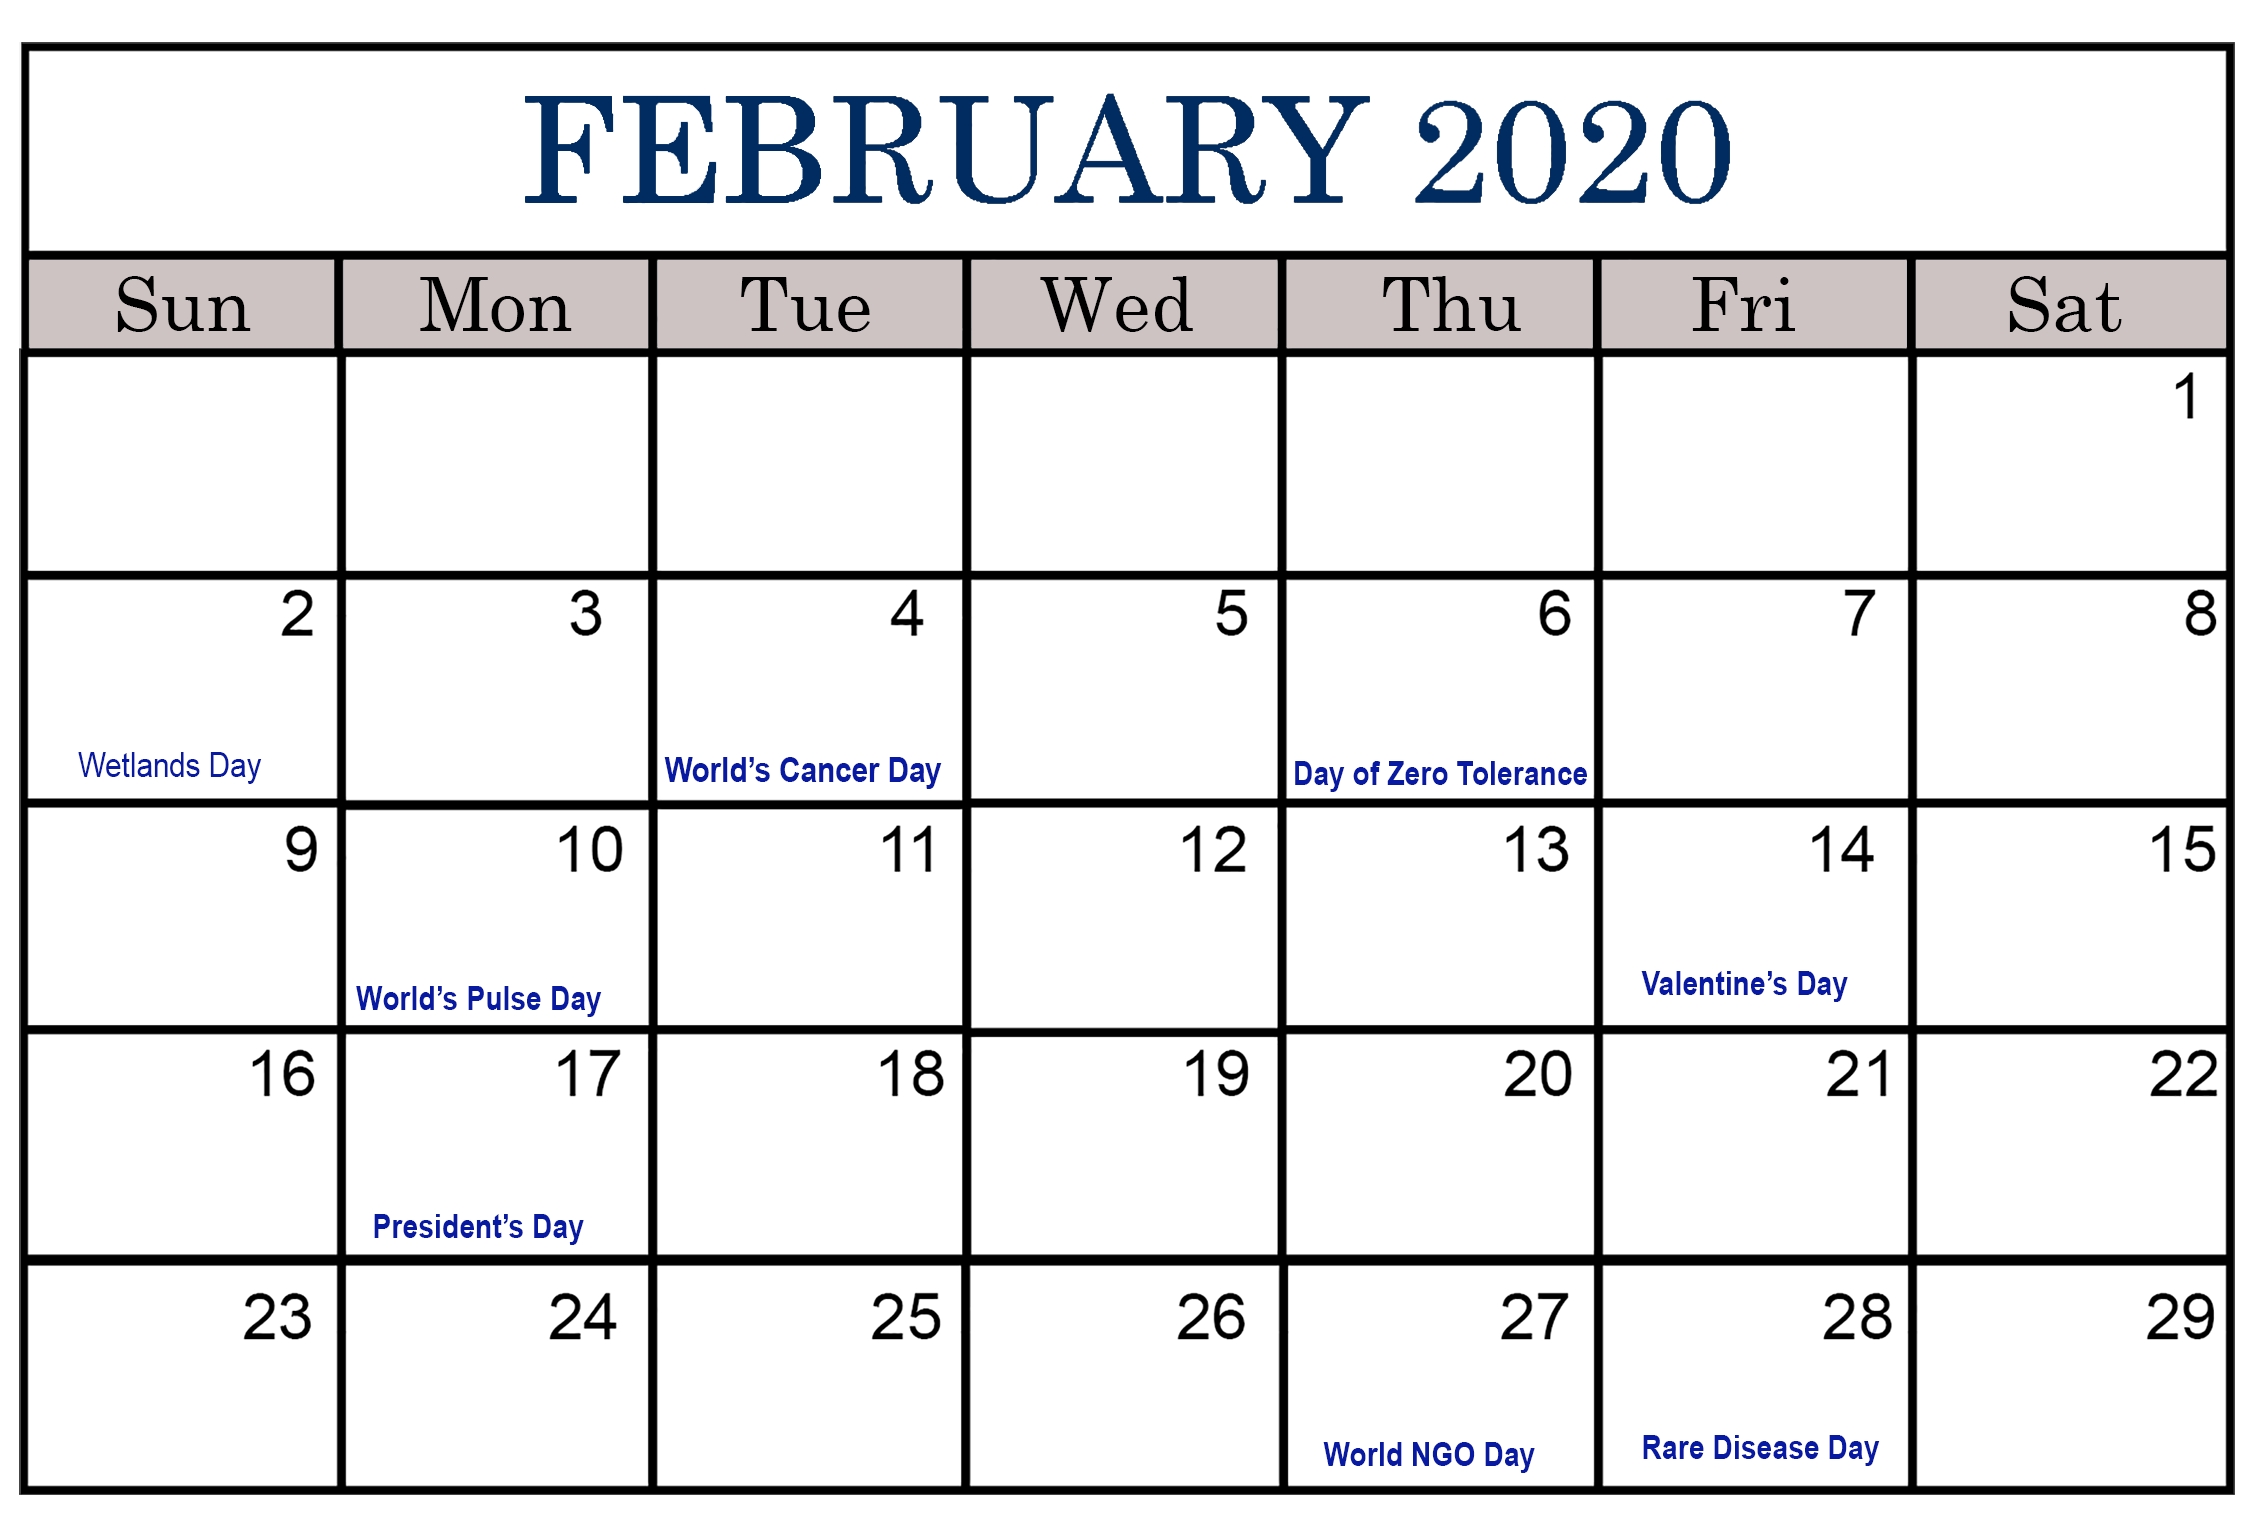 Worldwide February Holidays 2020 Calendar With Festival Dates Jewish To Gregorian Calendar 2020